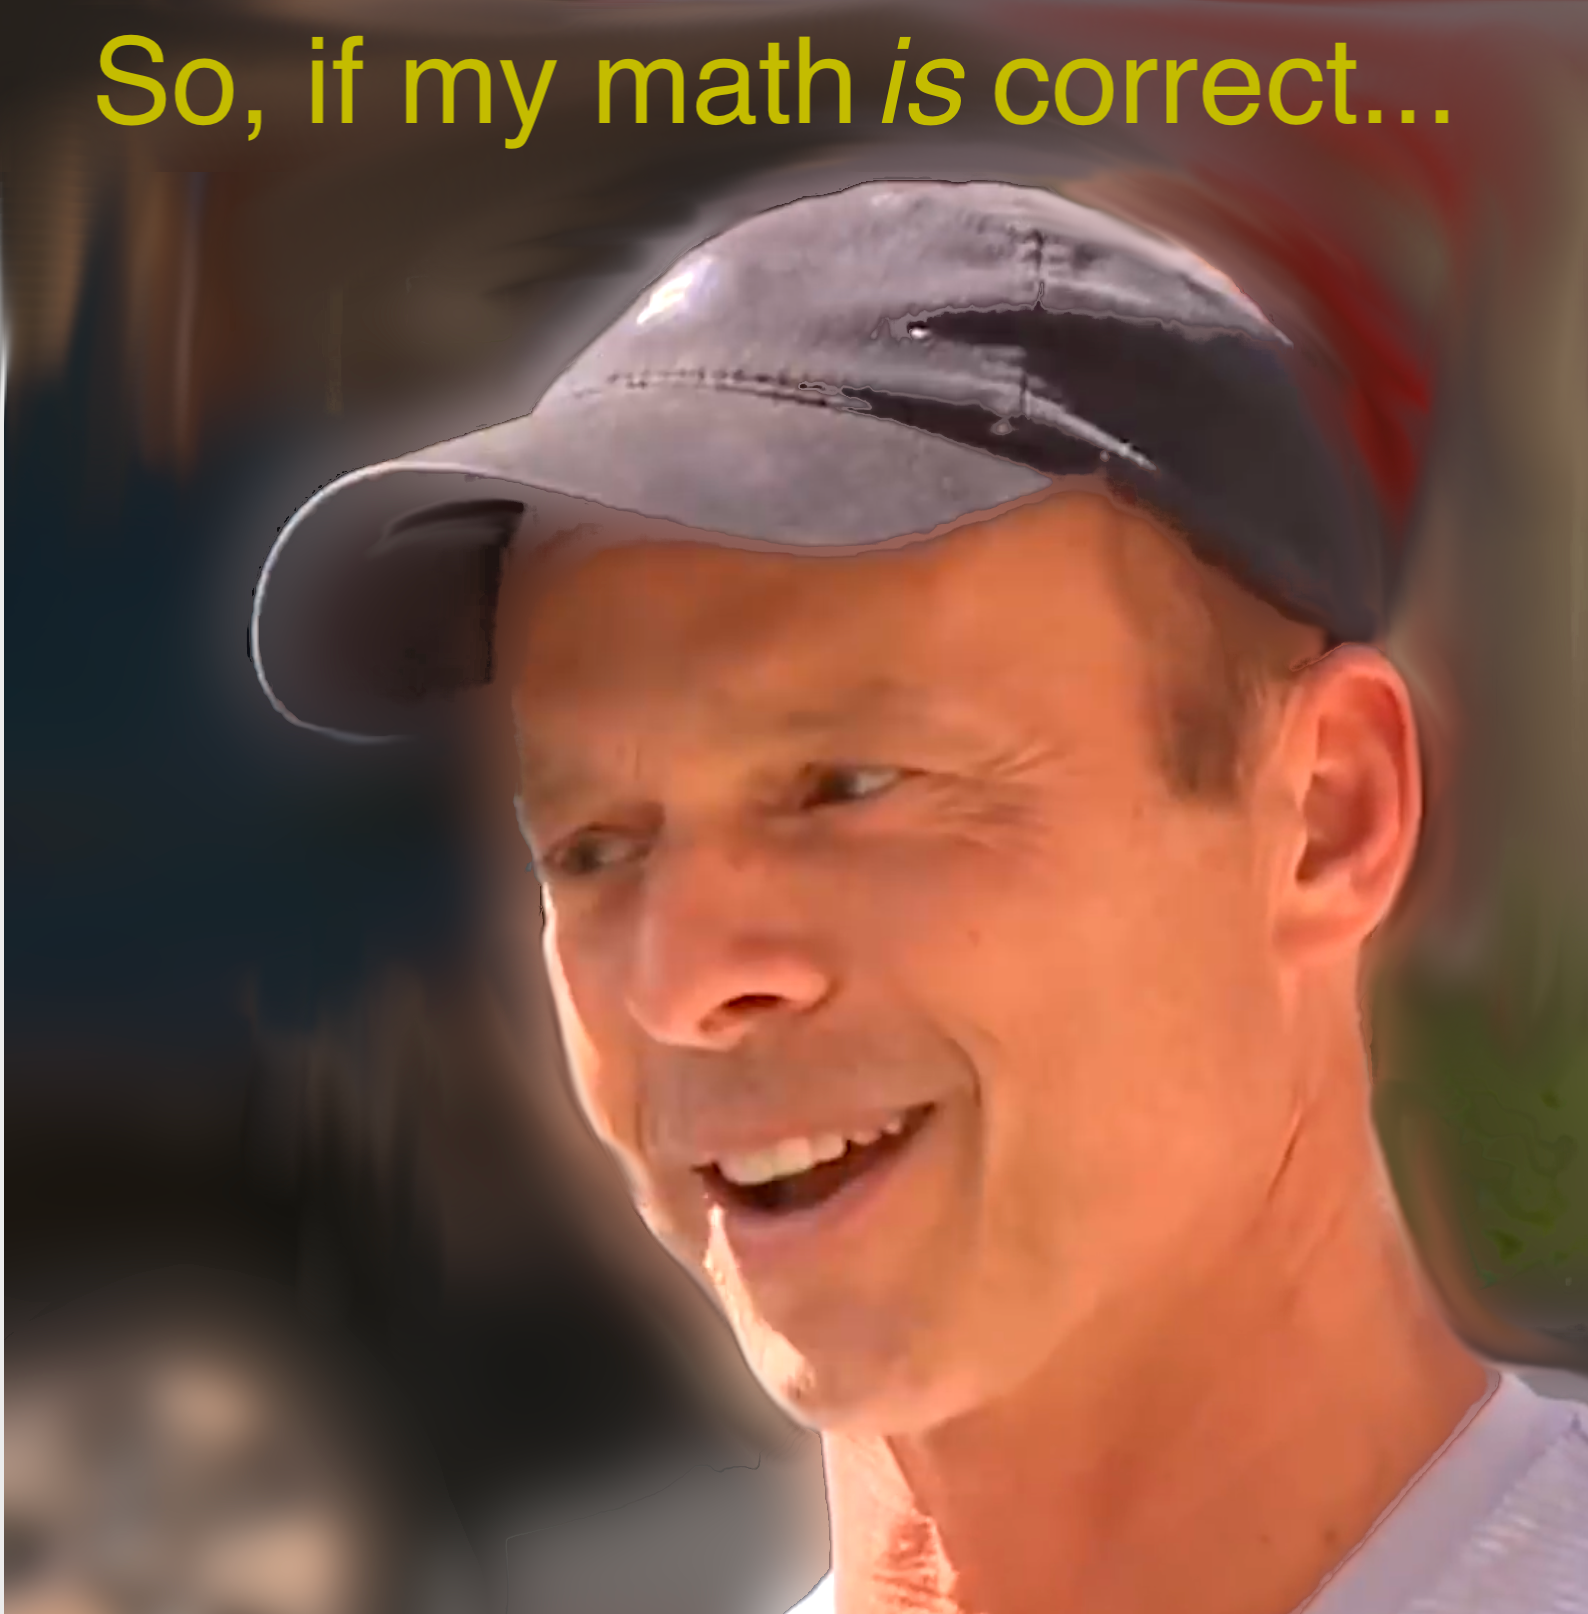 math is math Blank Template - Imgflip